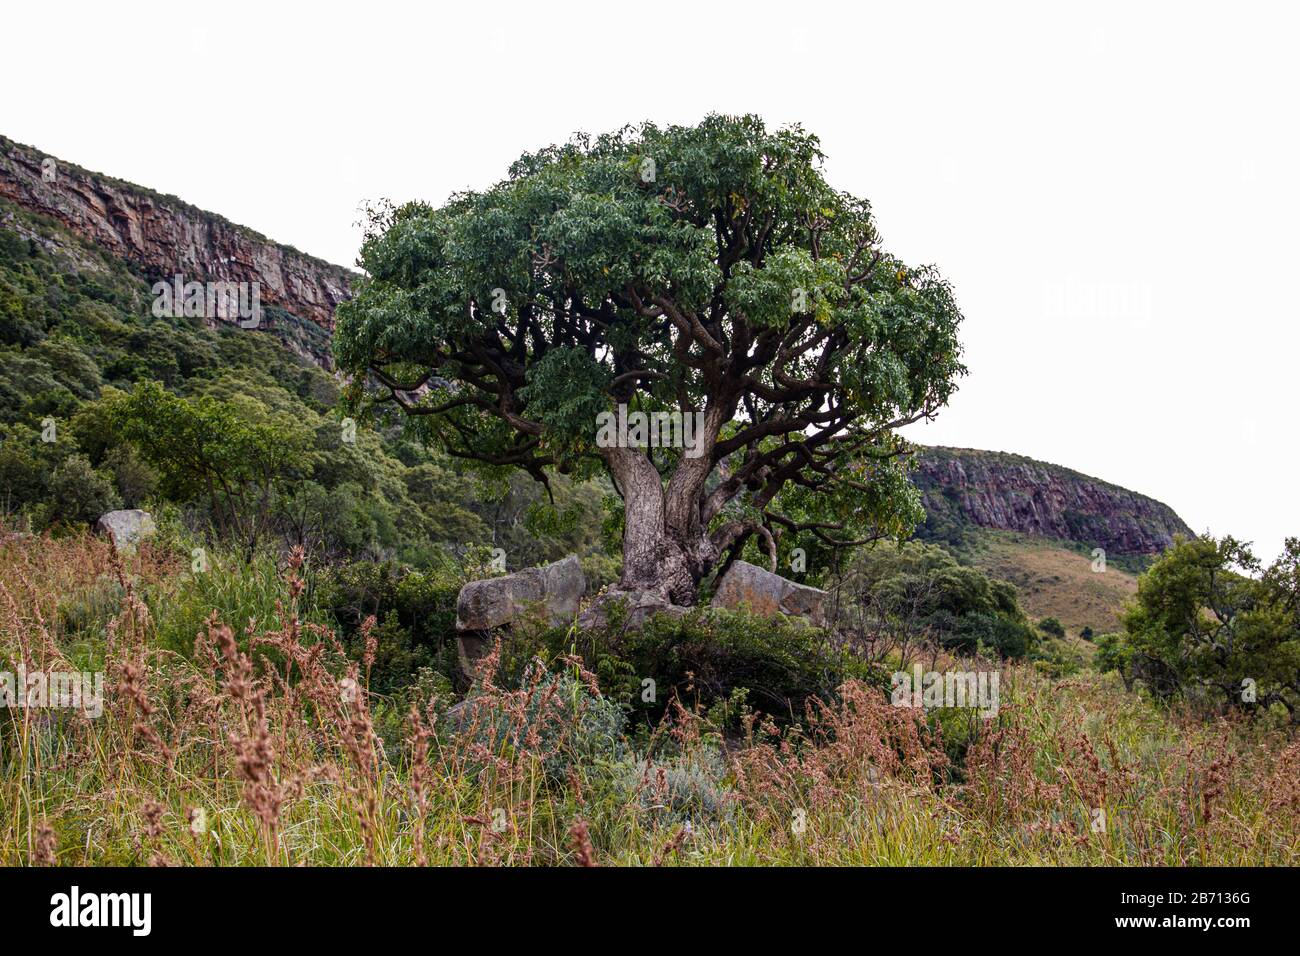 A kiepersol tree growing between rocks Stock Photo